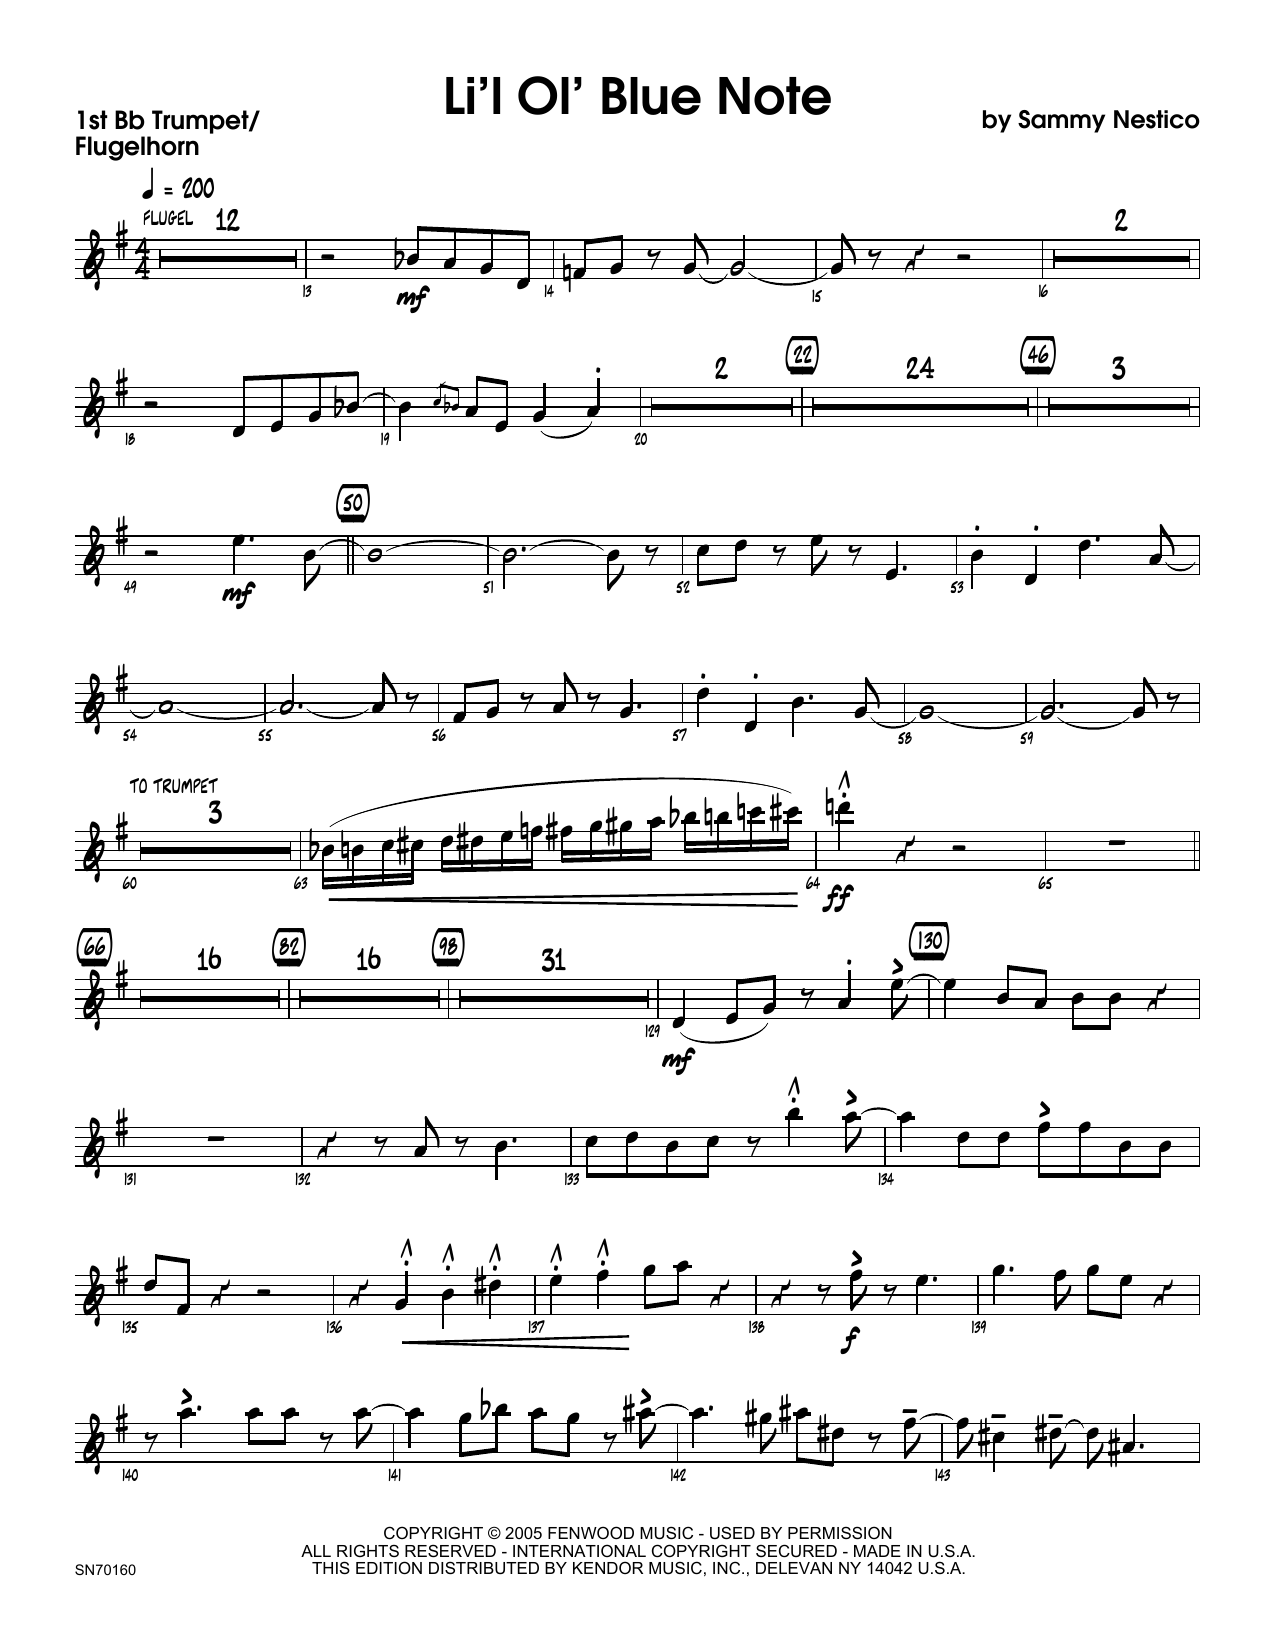 Download Sammy Nestico Li'l Ol' Blue Note - 1st Bb Trumpet Sheet Music